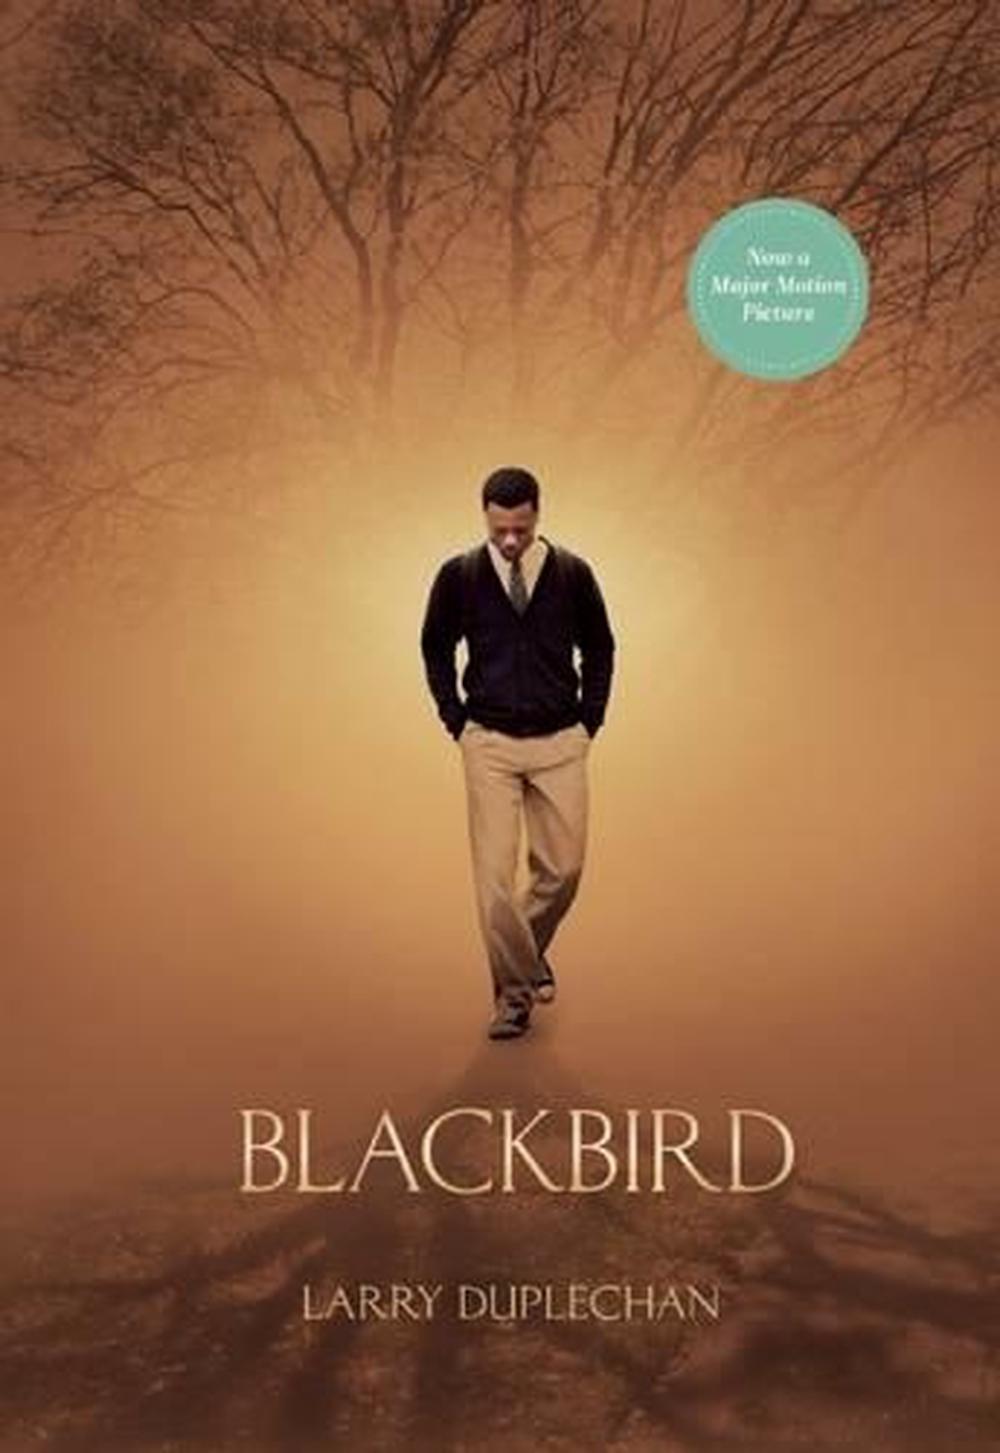 Blackbird by Larry Duplechan